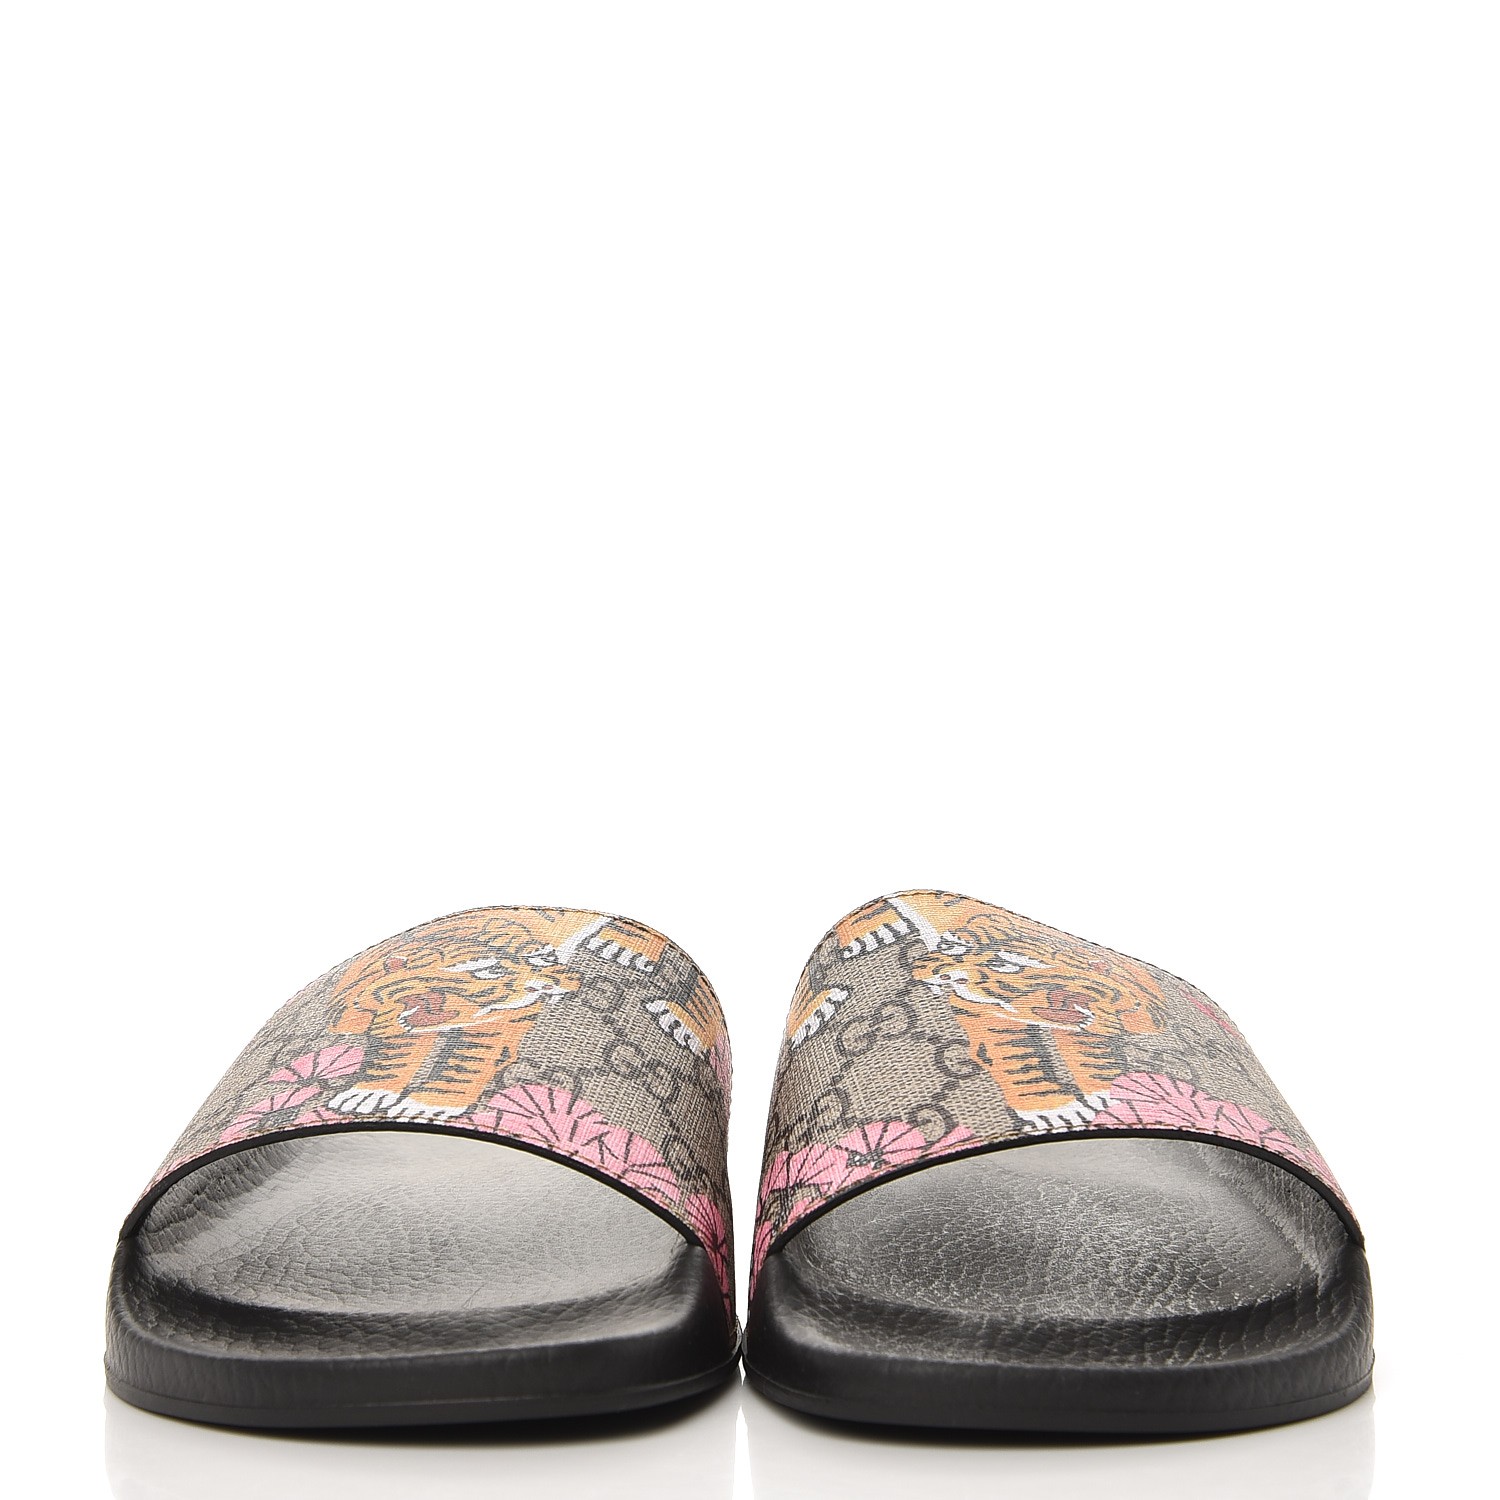 GUCCI GG Supreme Monogram Bengal Slide Sandals 39 Beige Pink 236546